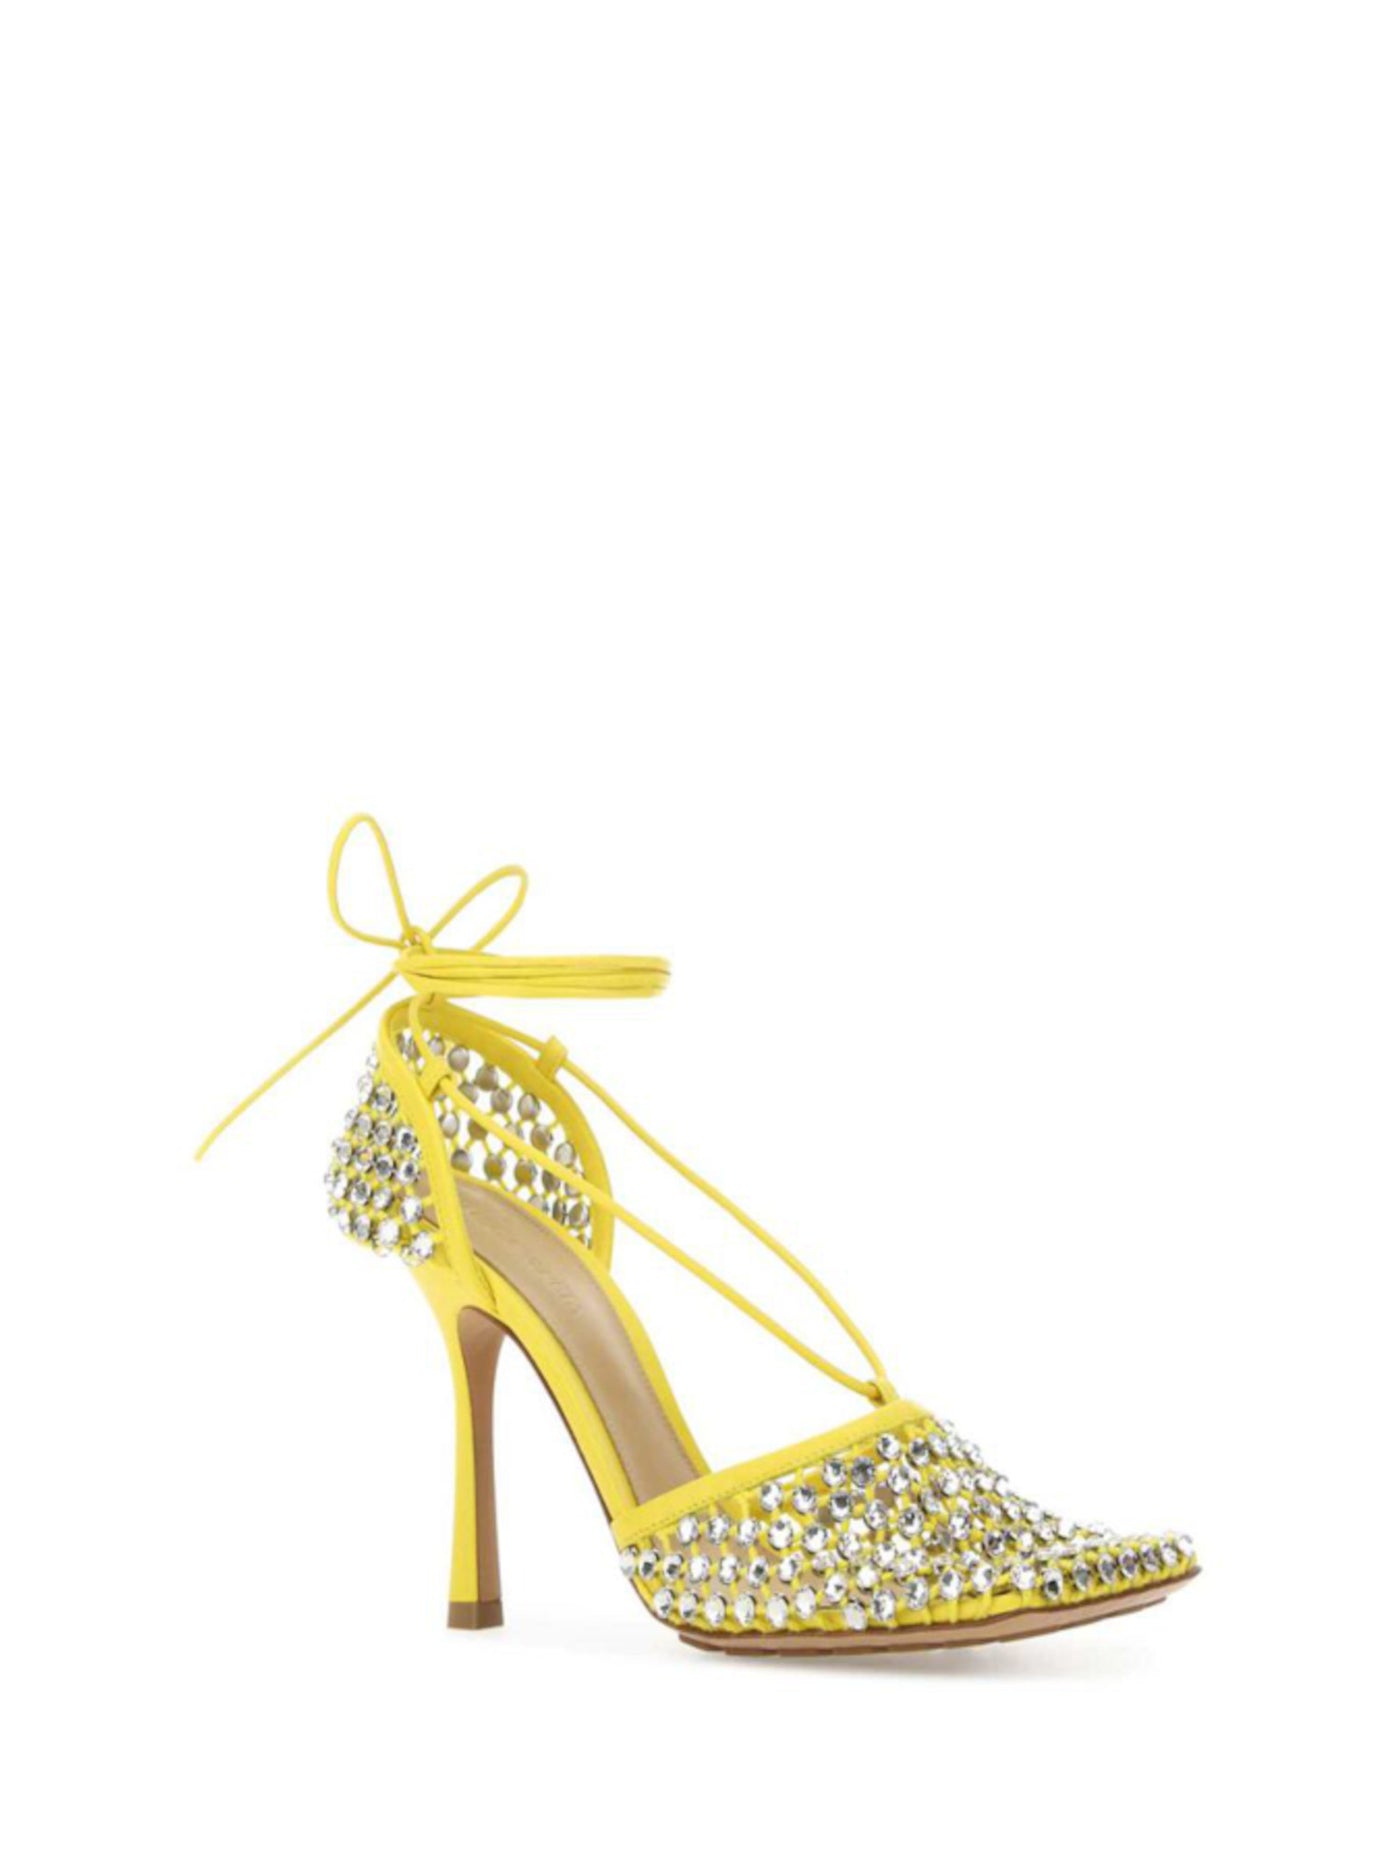 BOTTEGA VENETA Womens Yellow Tie Ankle Strap Embellished Square Toe Stiletto Slip On Pumps Shoes 39